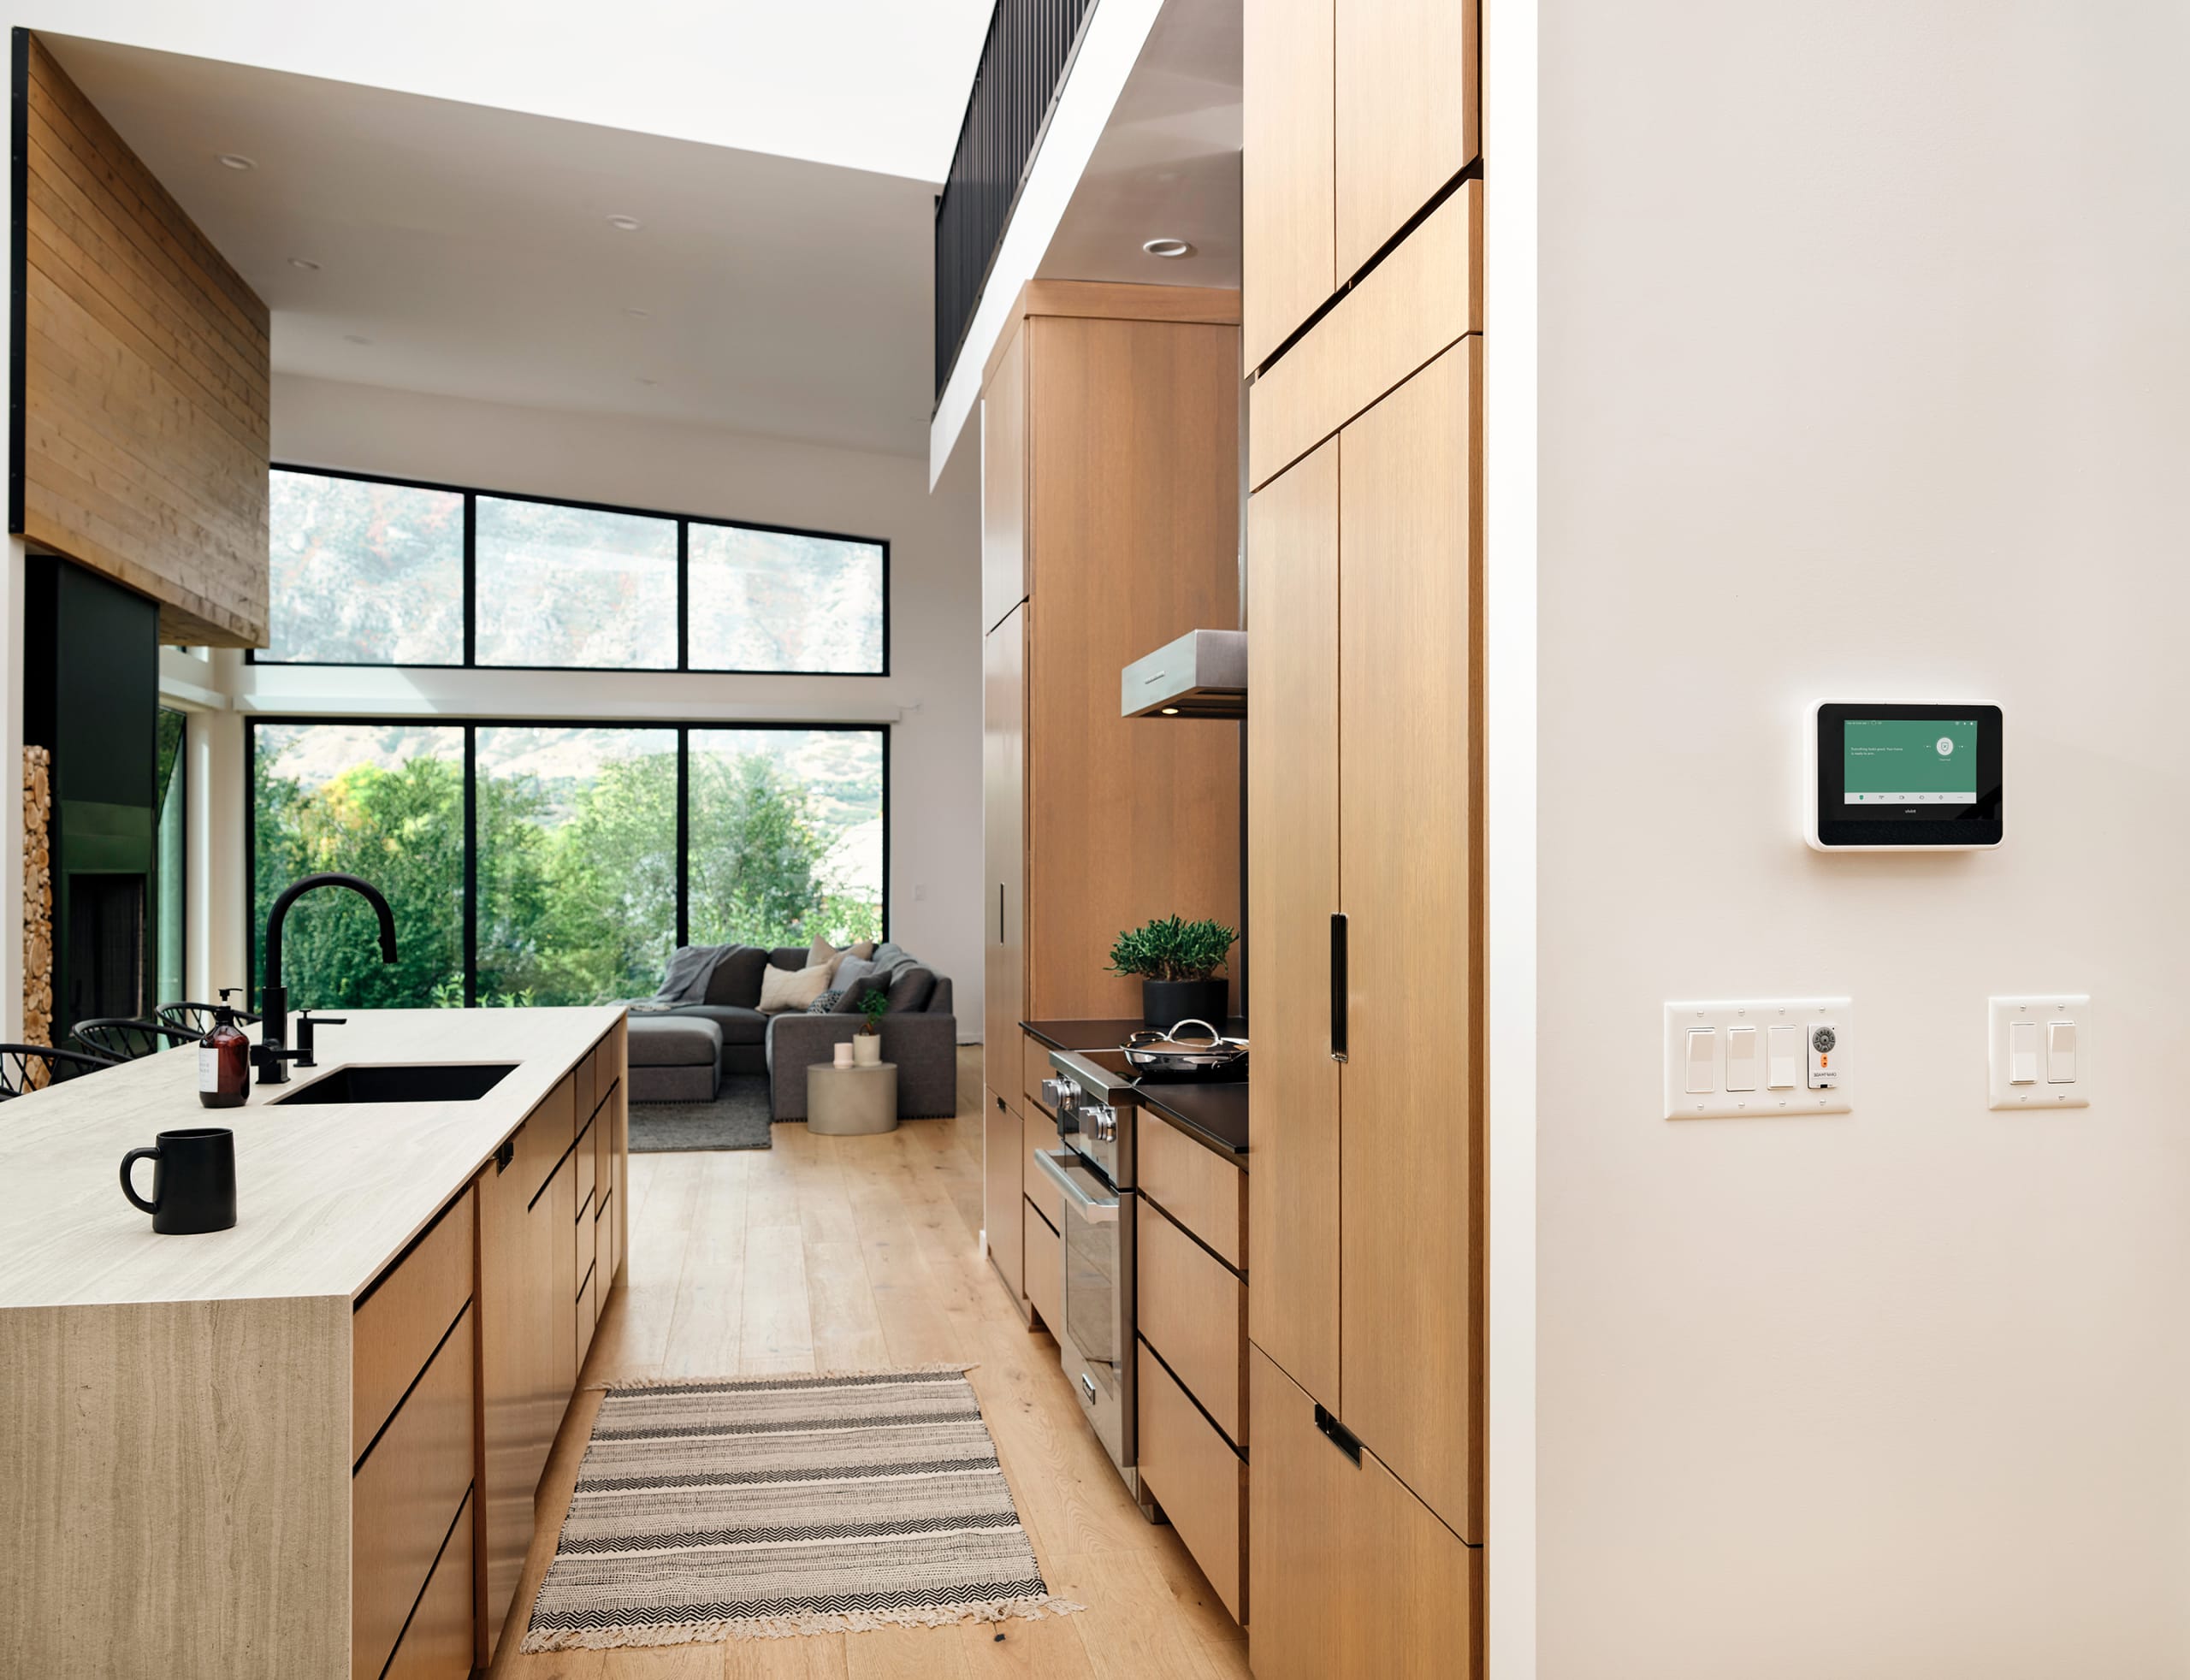 Vivint smart hub in a modern kitchen